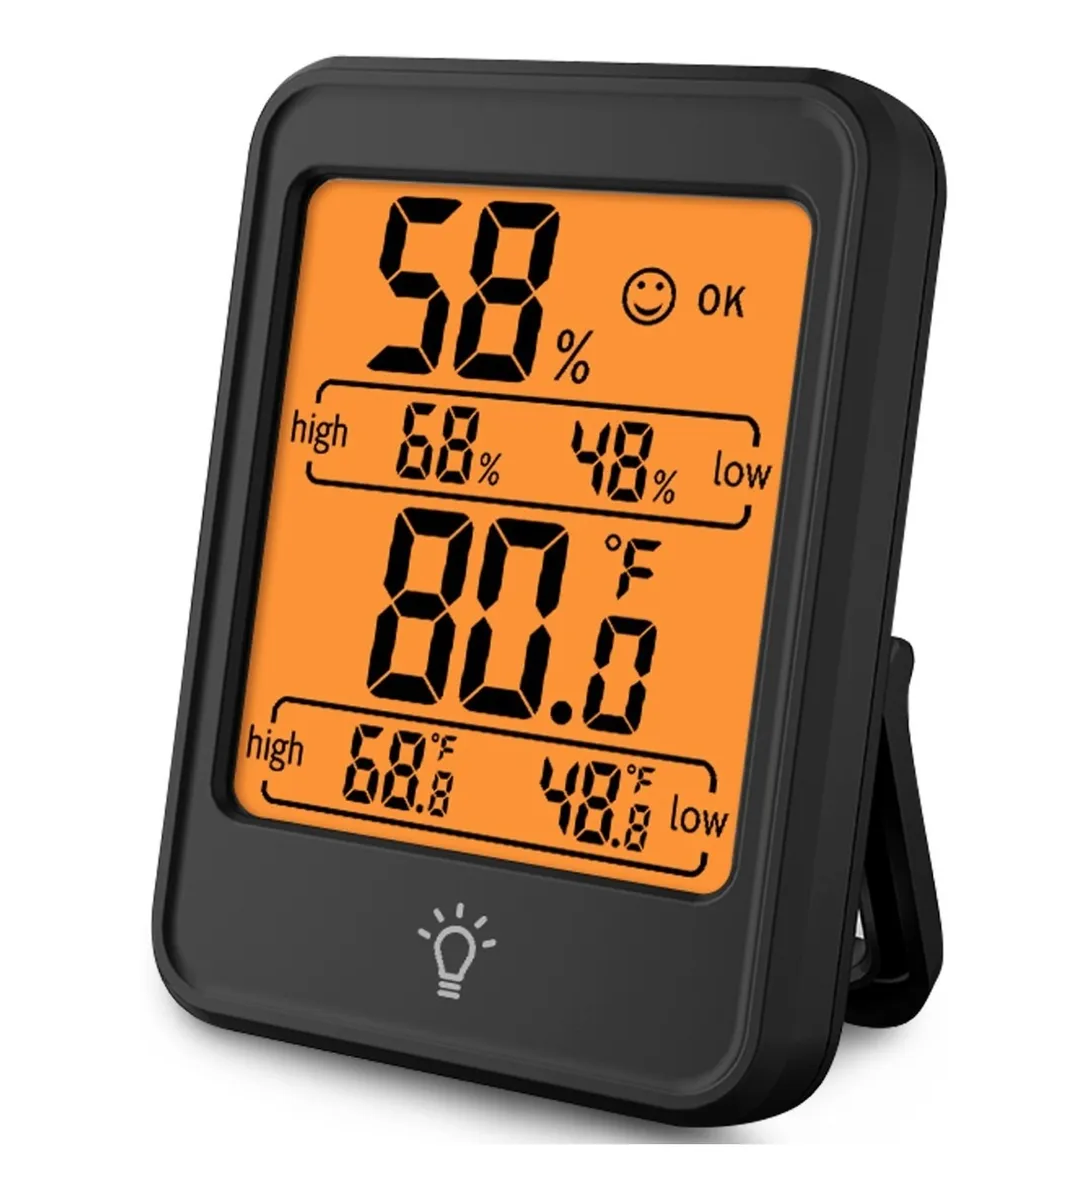 Termometro Higrometro Digital